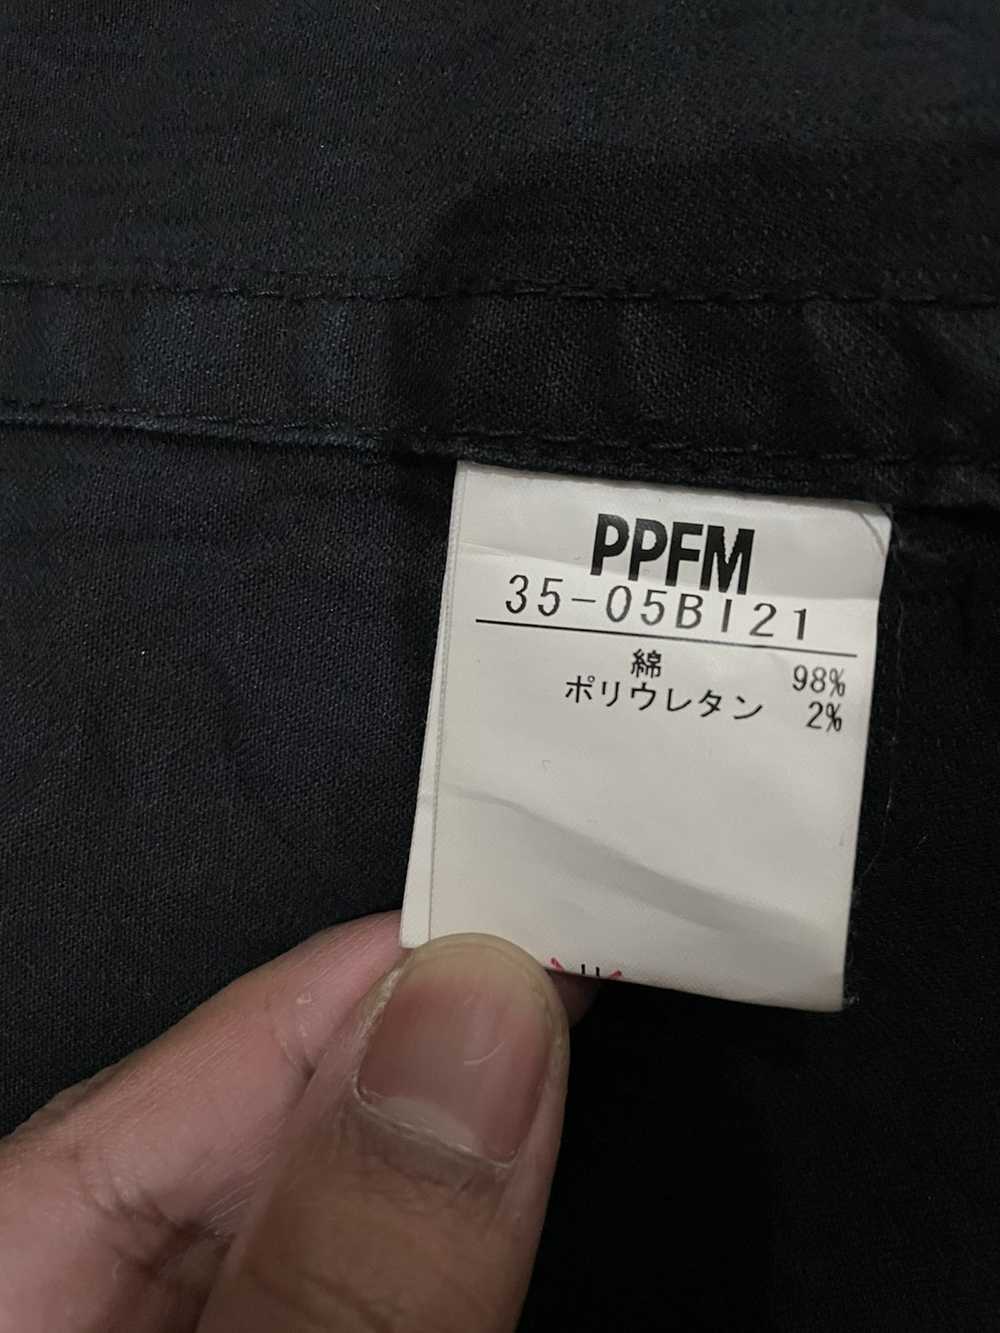 PPFM Rare🤘 PPFM Jacket Removable Sleeves - image 11